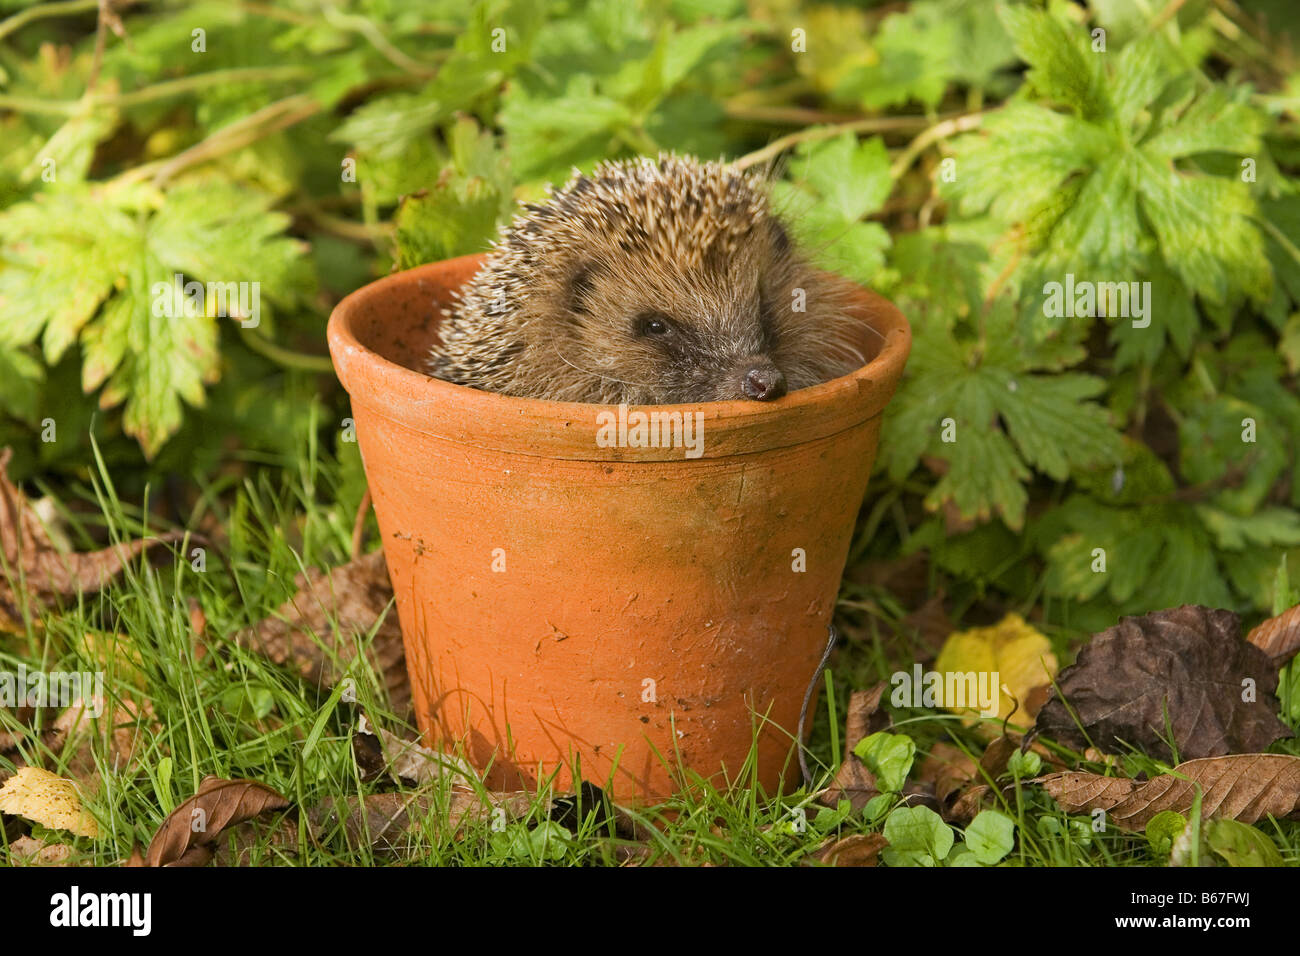 Hedgehog in flower pot Stock Photo